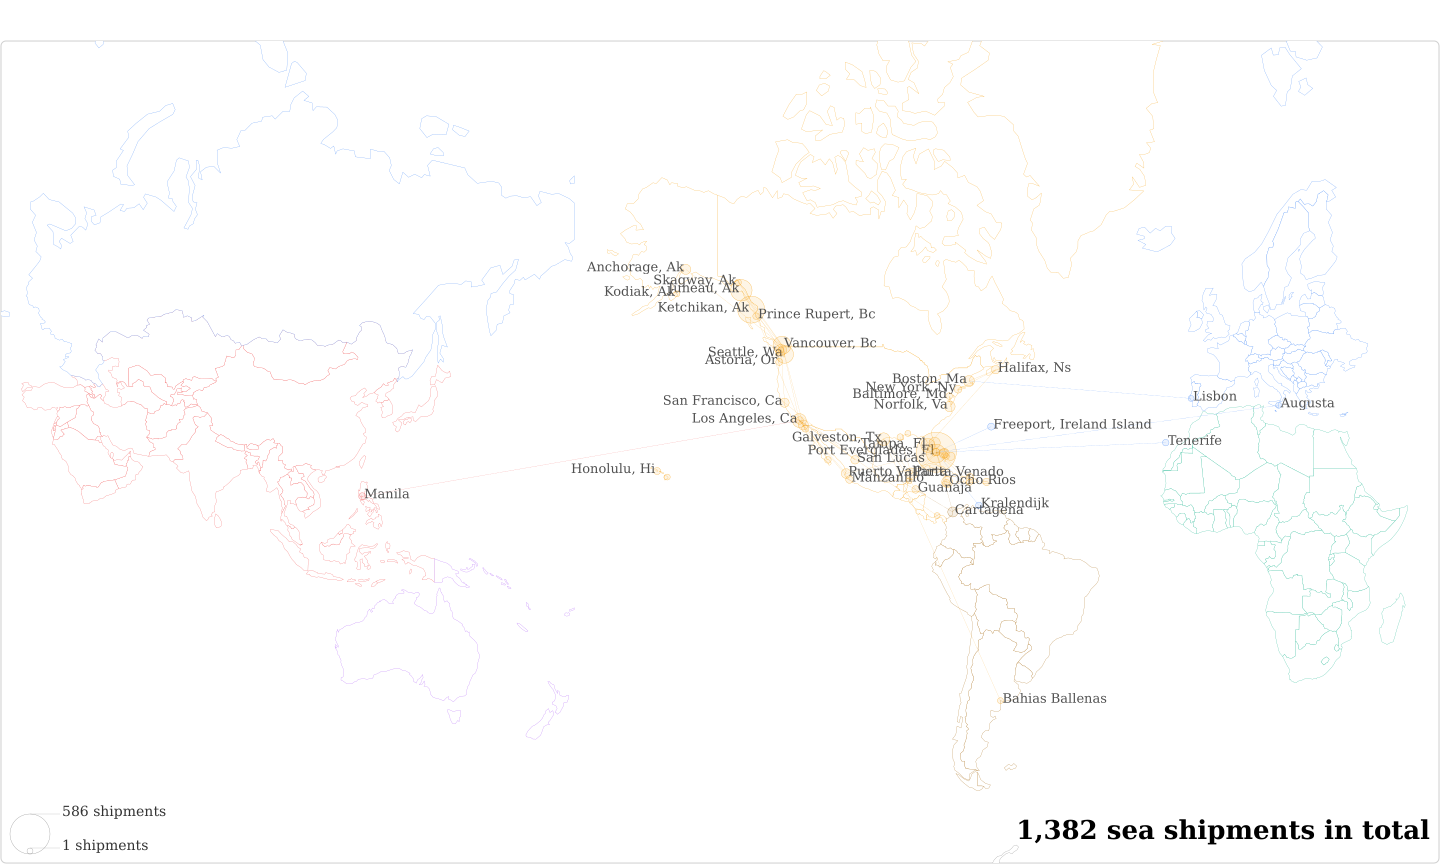 Veritas Petroleum Services's Imports Per Country Map